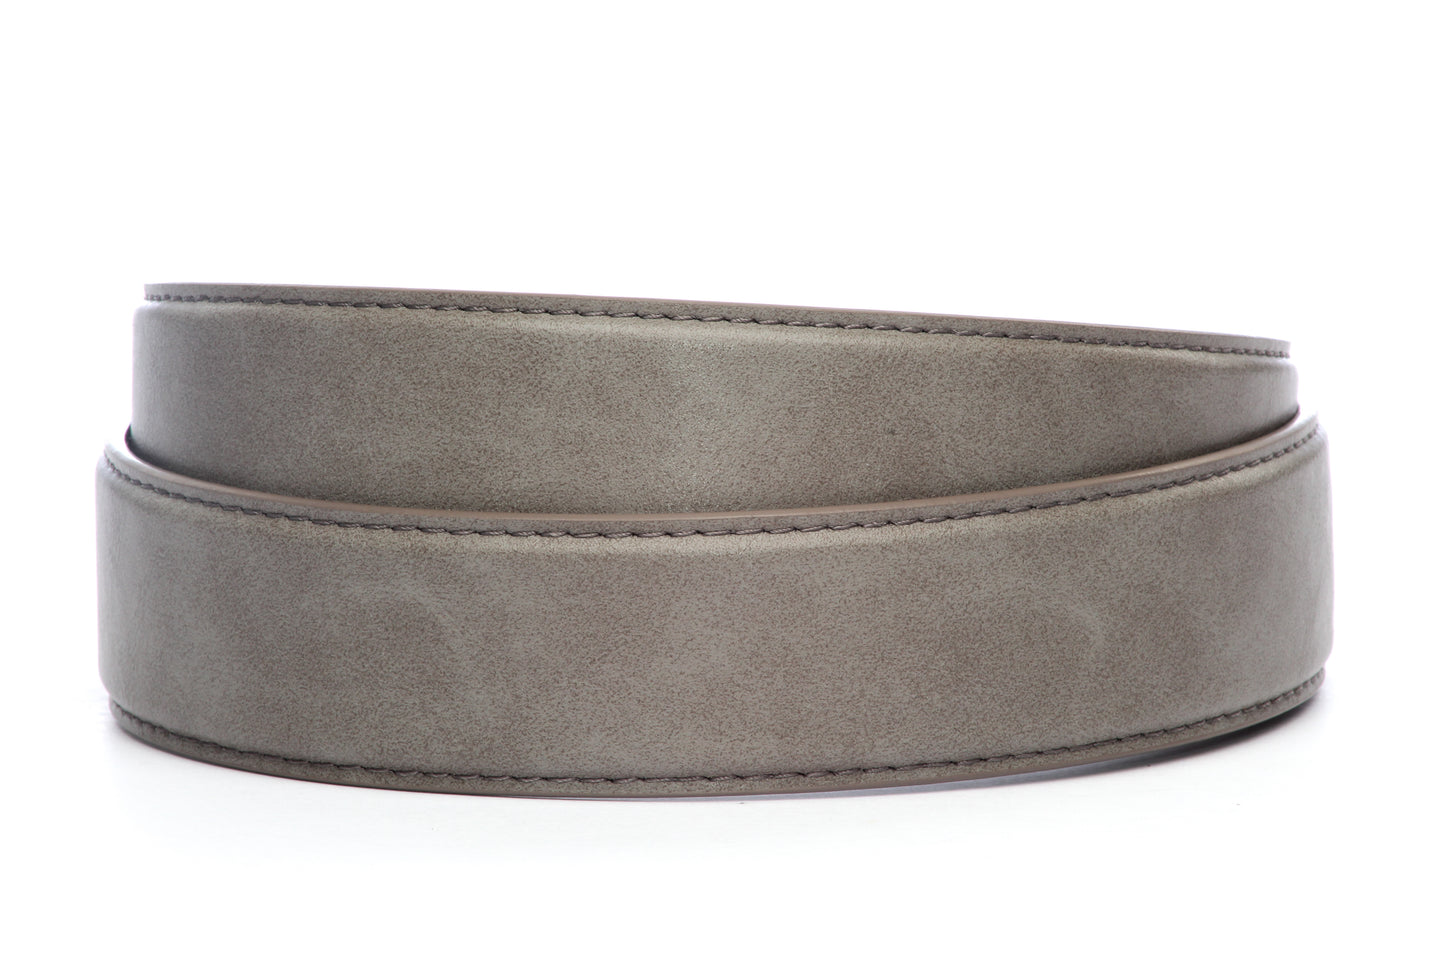 Men's vegan microfiber belt strap in shark grey, 1.5 inches wide, formal look